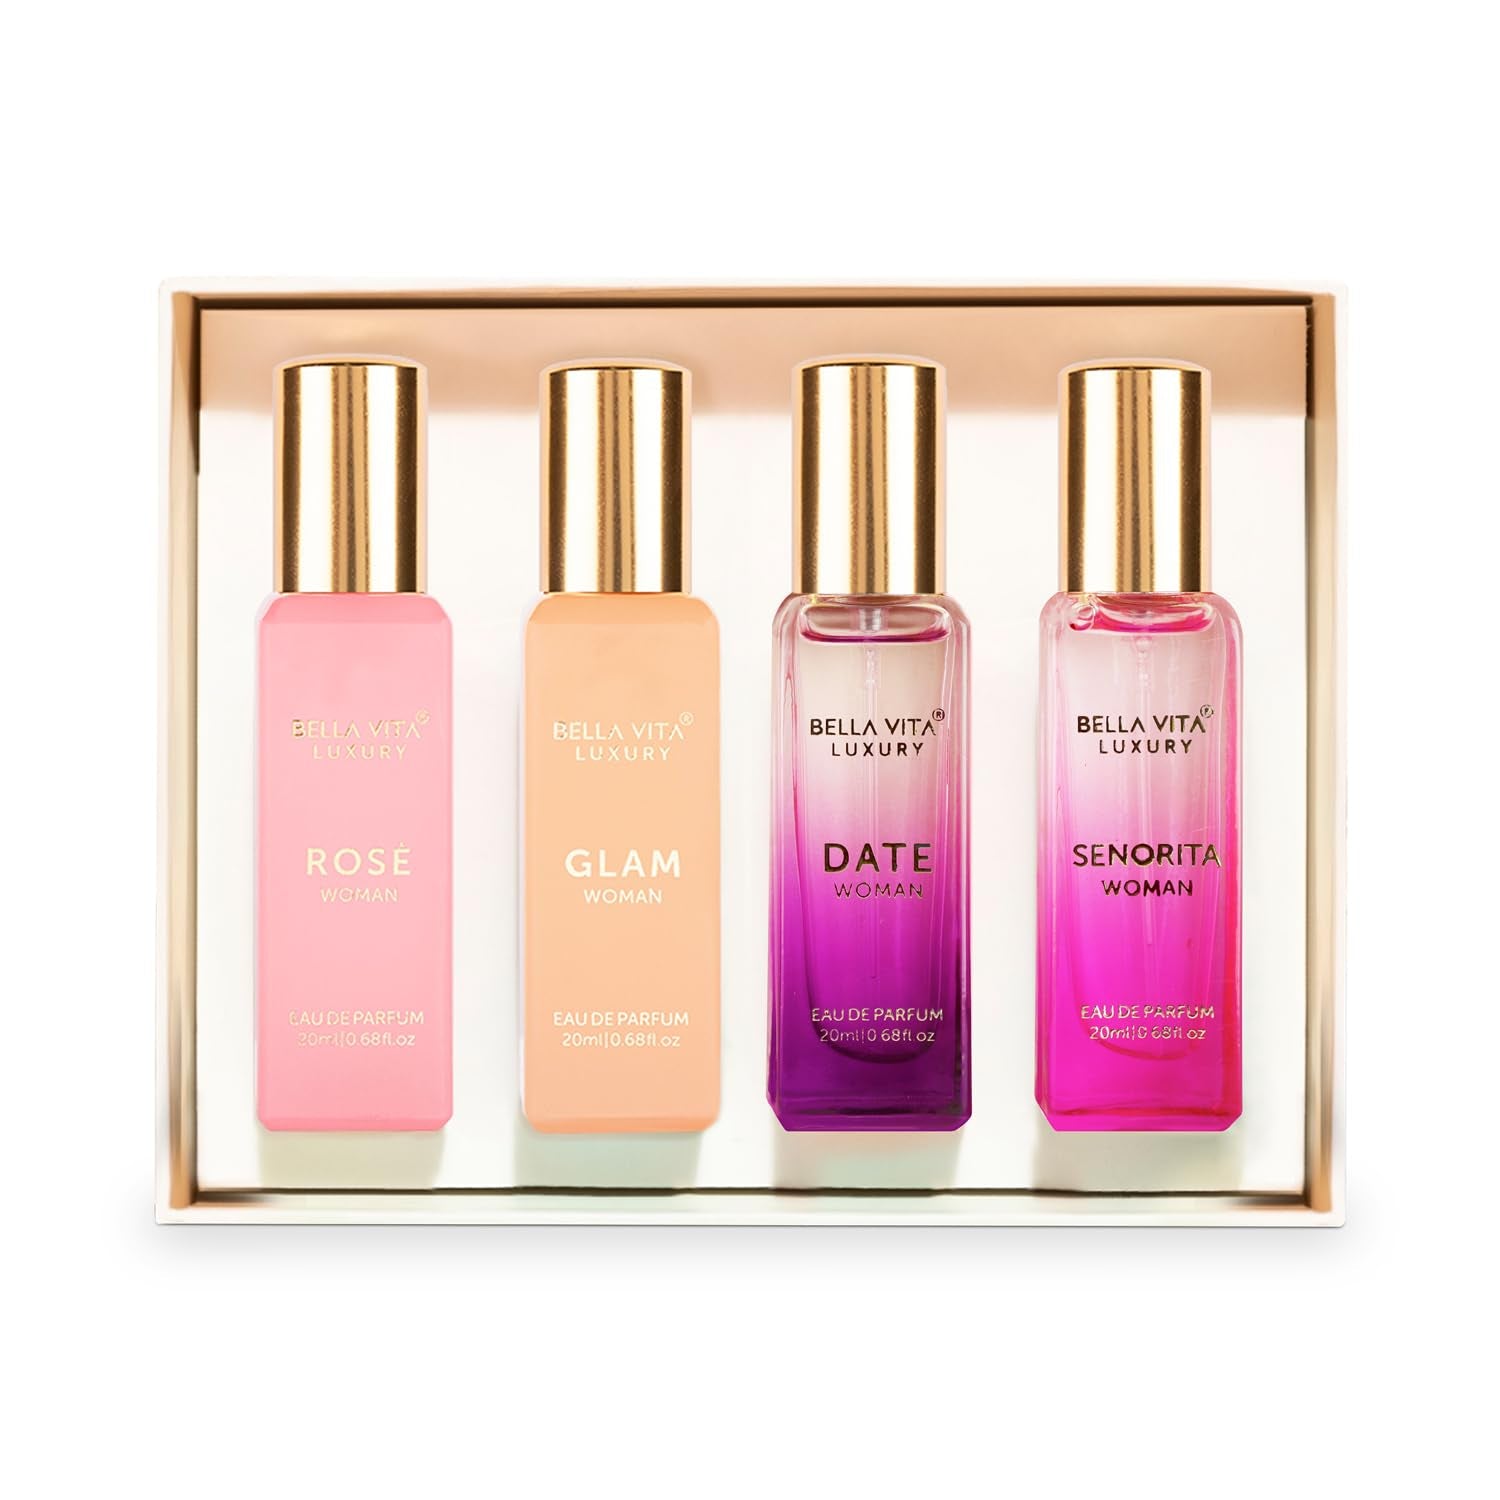 Woman Eau De Parfum Gift Set 4x20 ml for Women with Date, Senorita, Glam, Rose Perfume | Floral, Fruity Long Lasting EDP Fragrance Scent